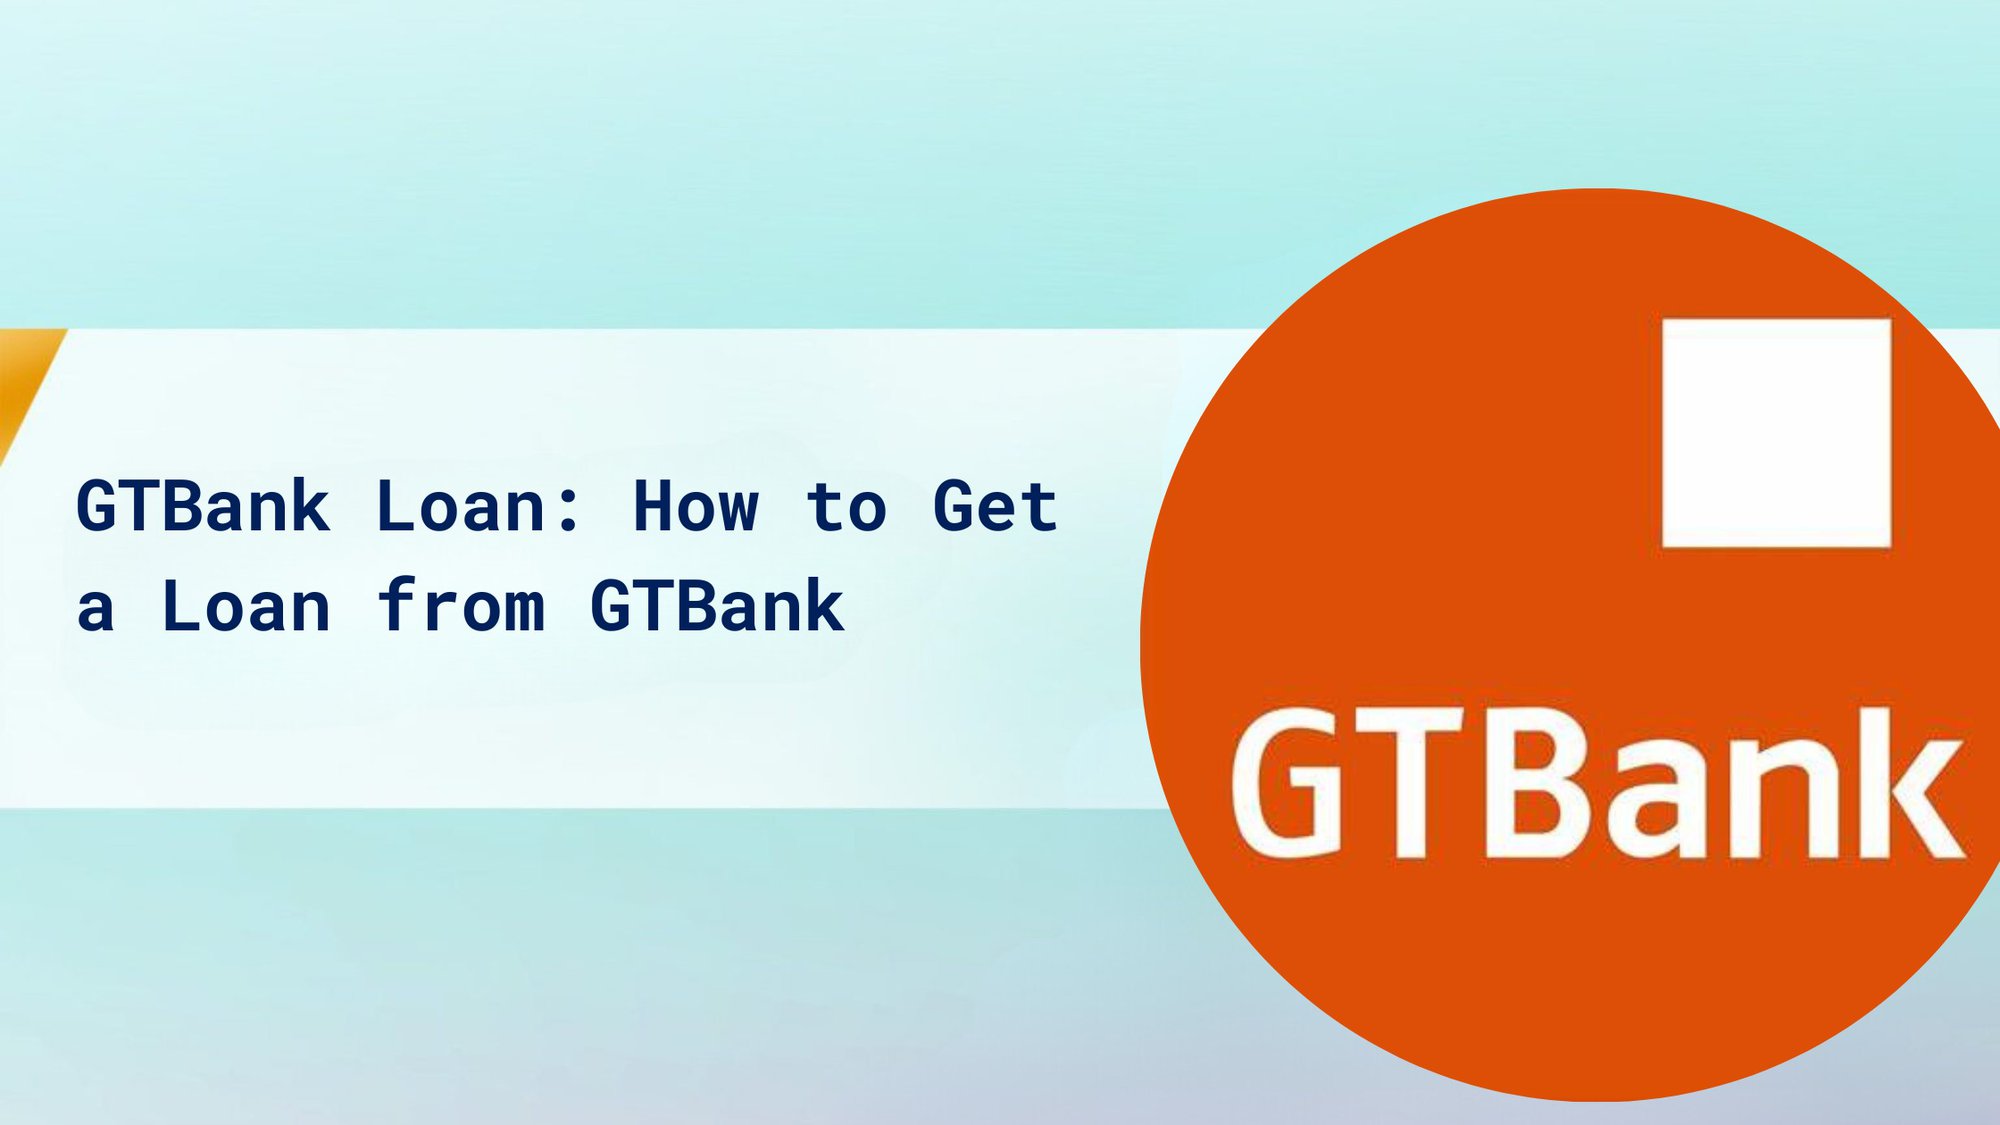 GTBank Loan: How to Get a Loan from GTBank